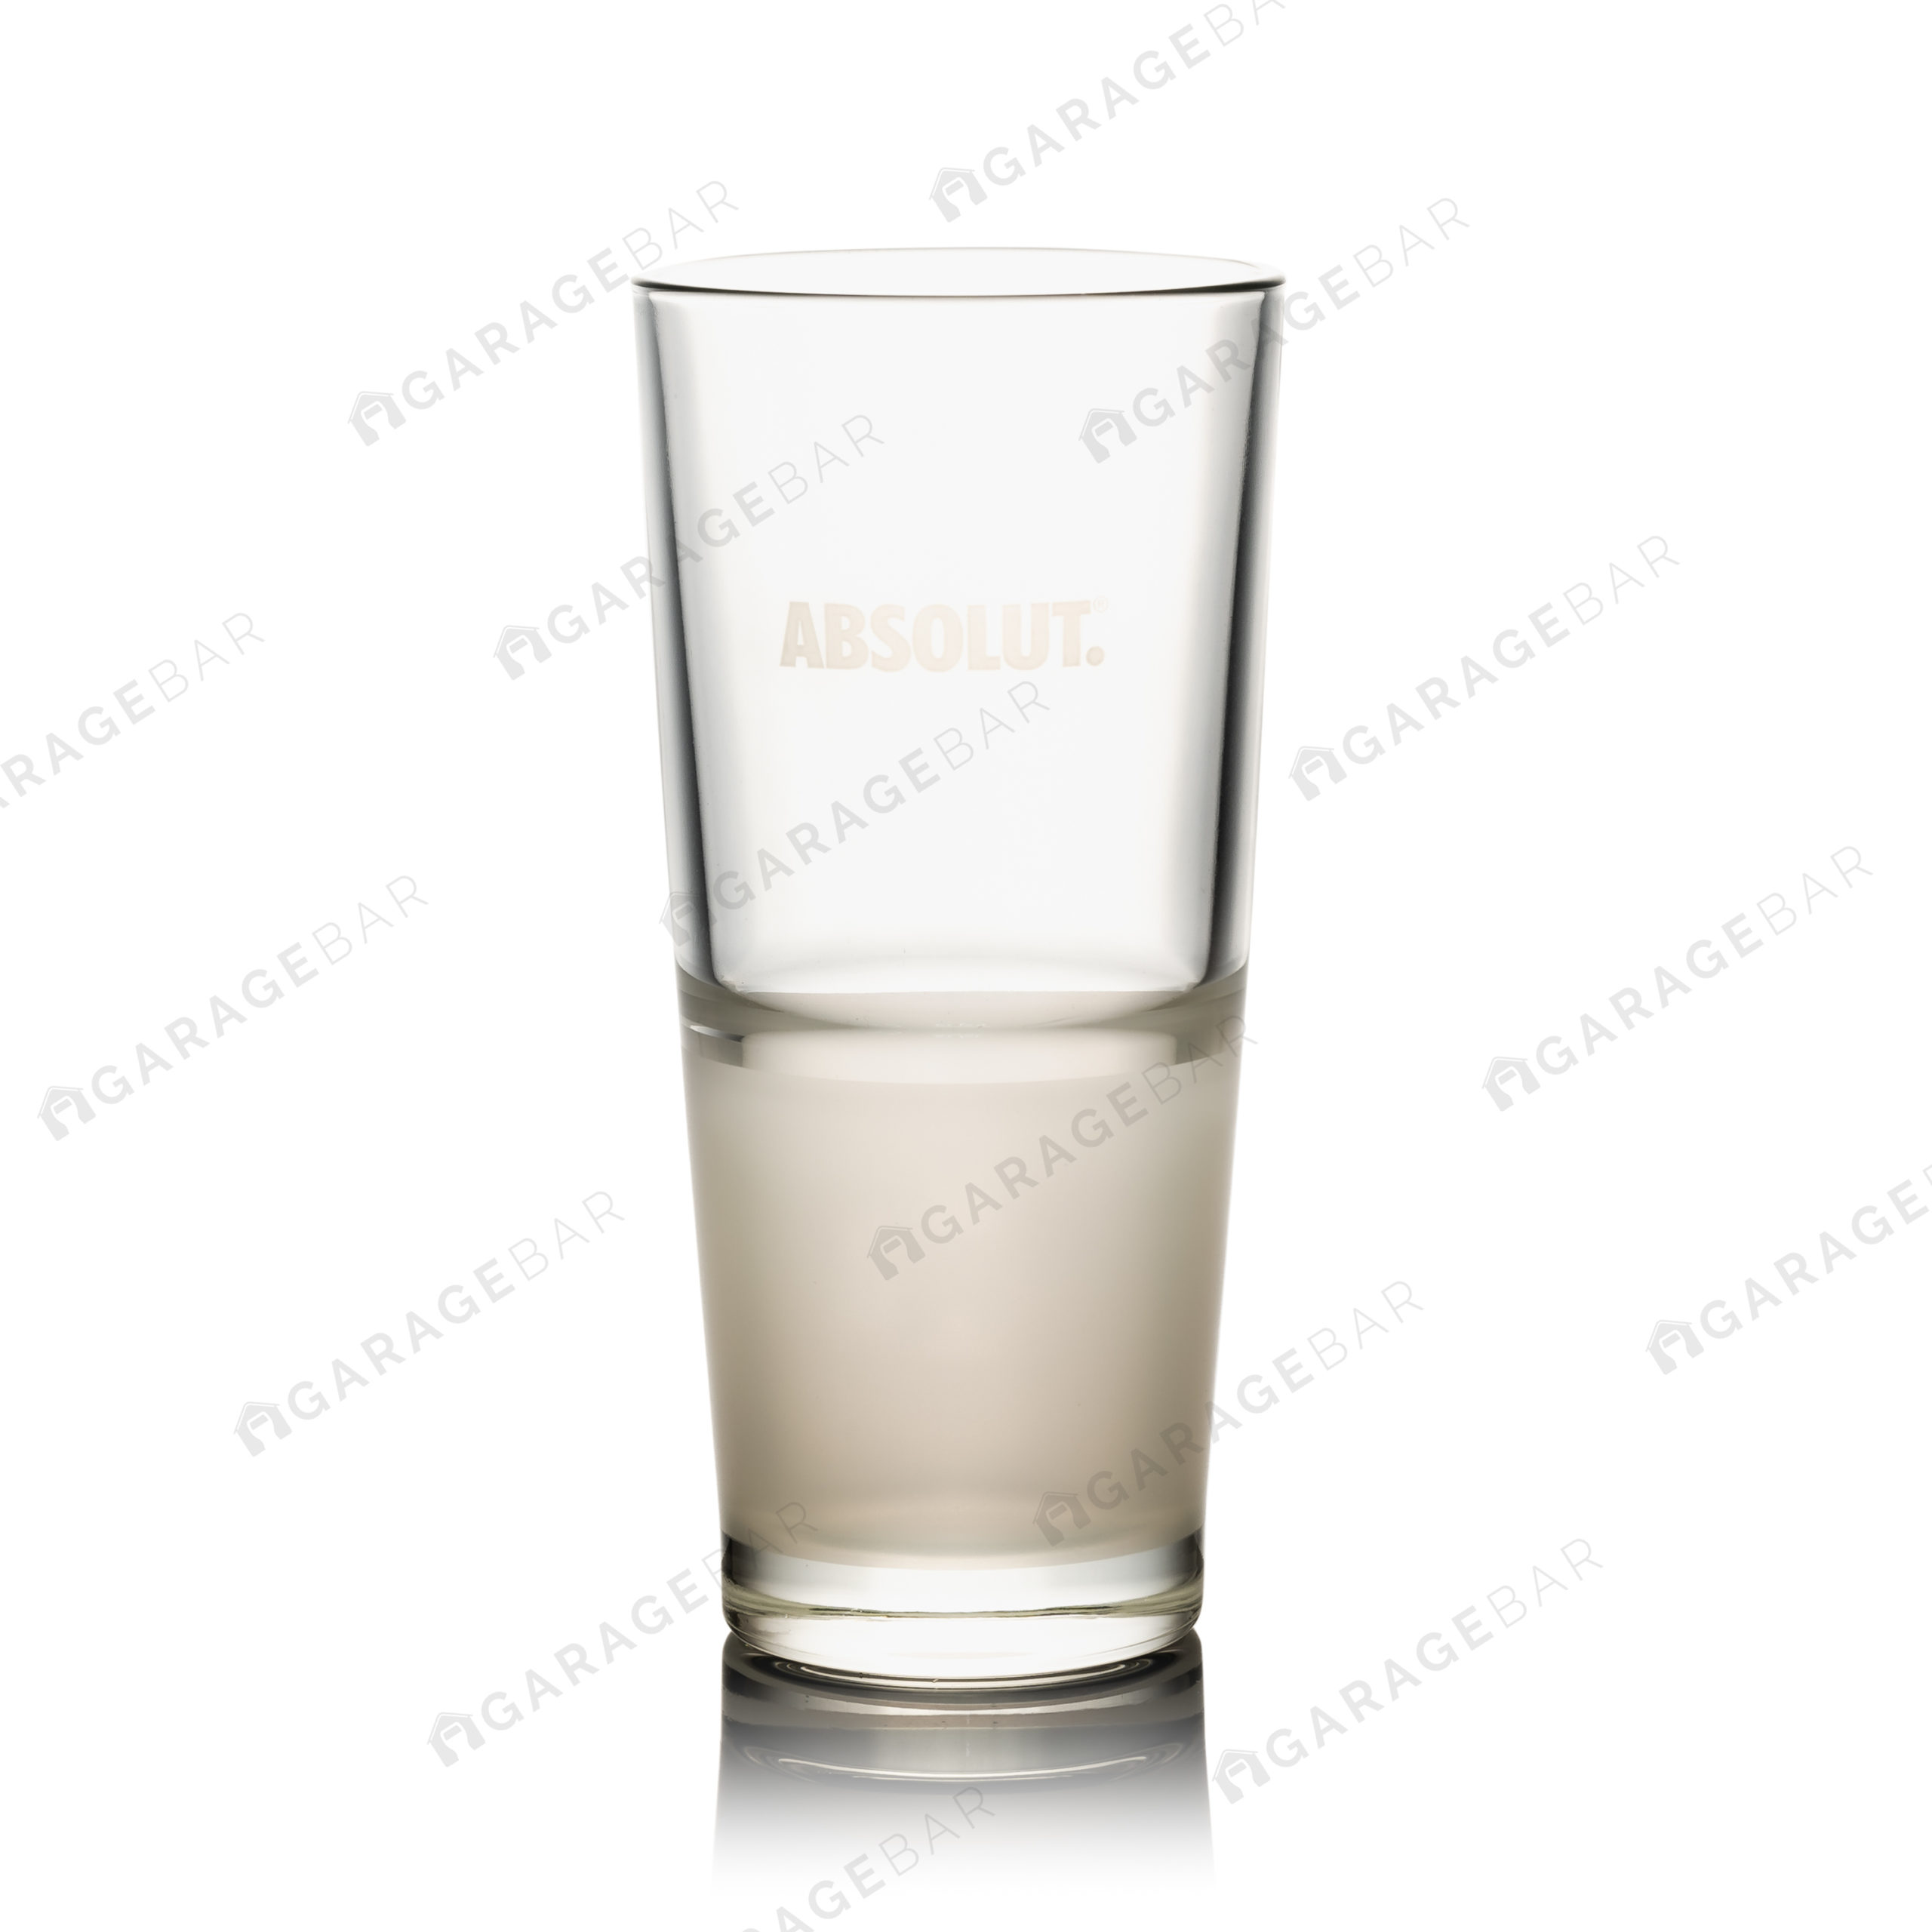 Absolut Vodka Tumbler Glass